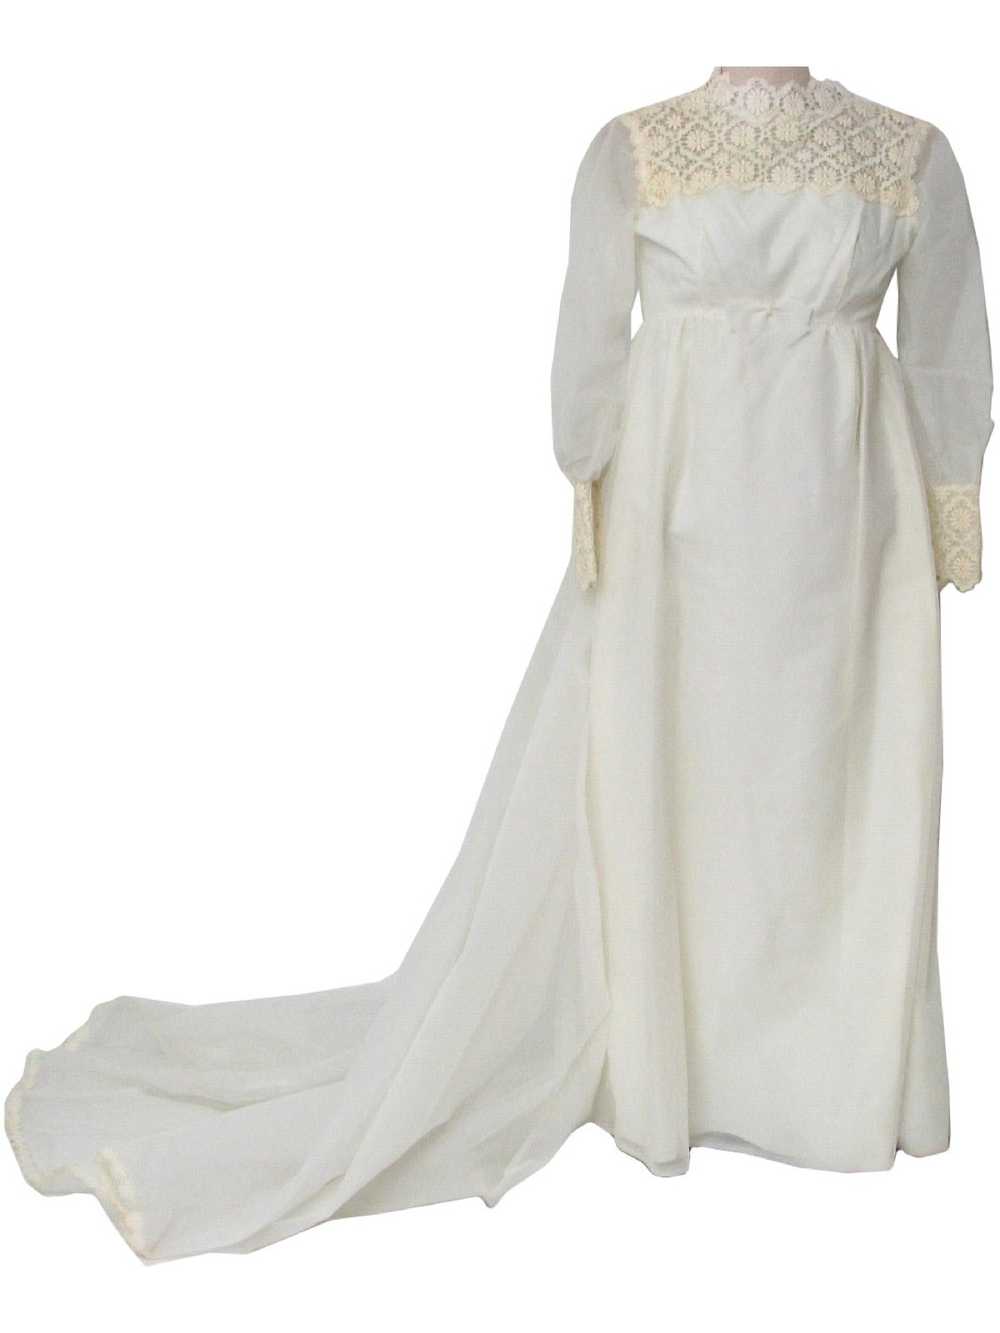 1970's Wedding Dress - image 1